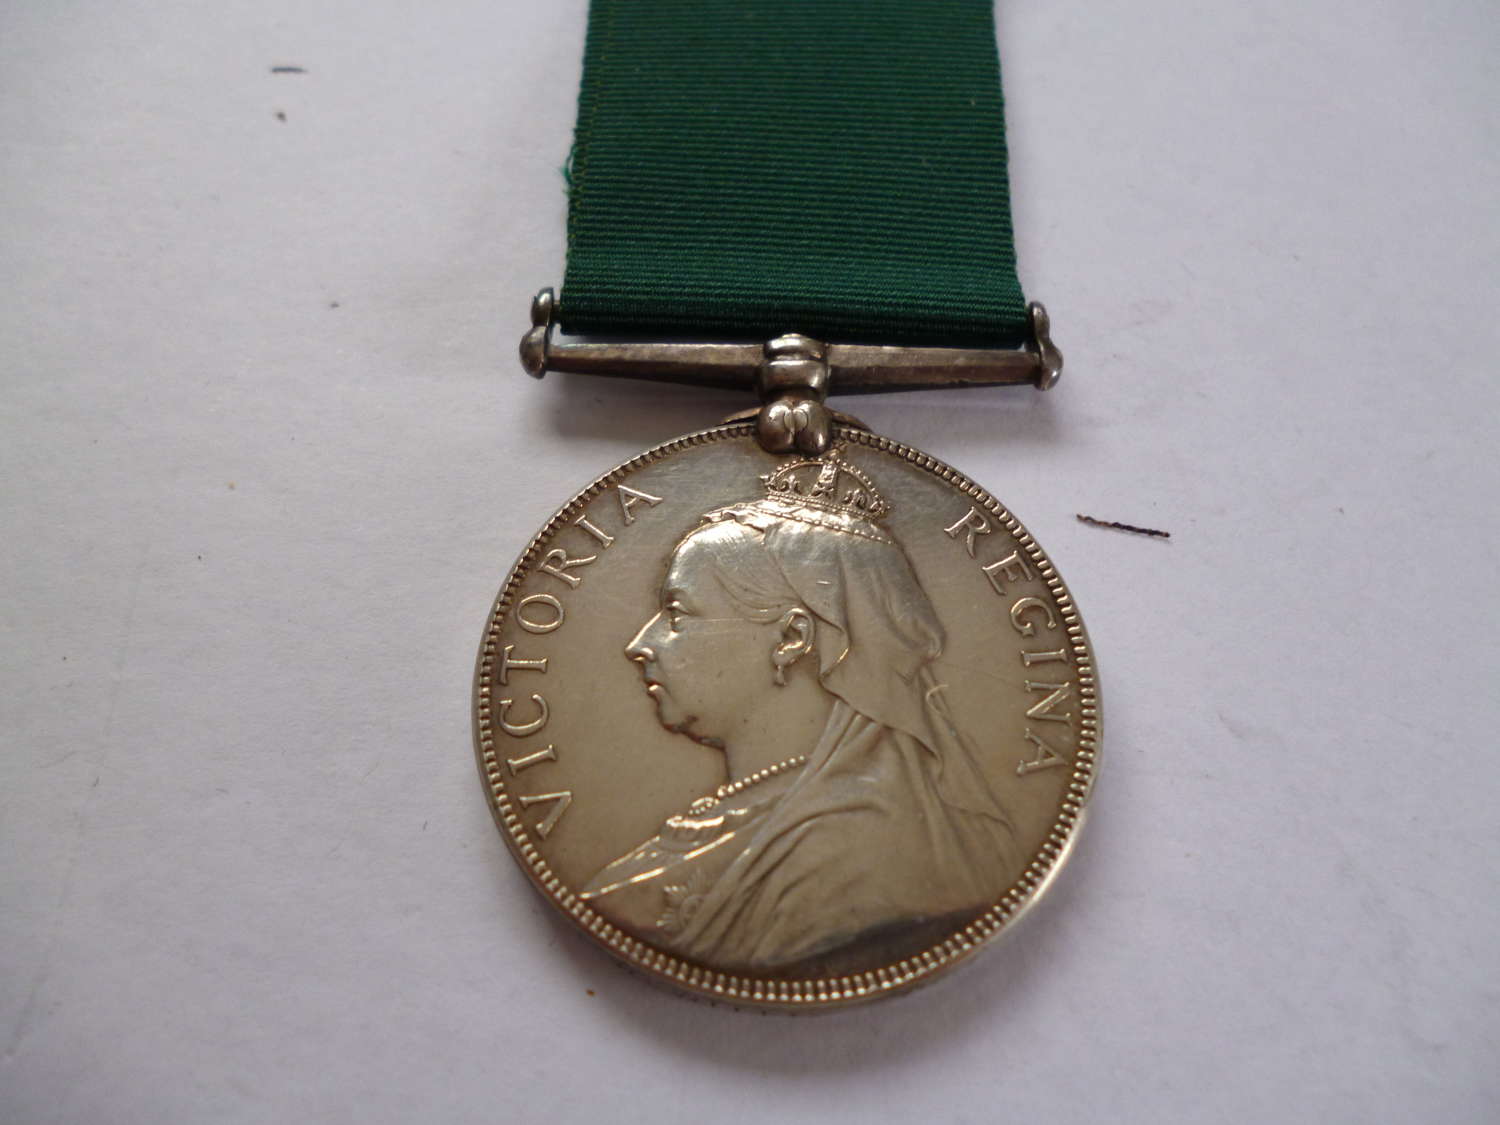 Victoerian Volunteer Long Service Medal